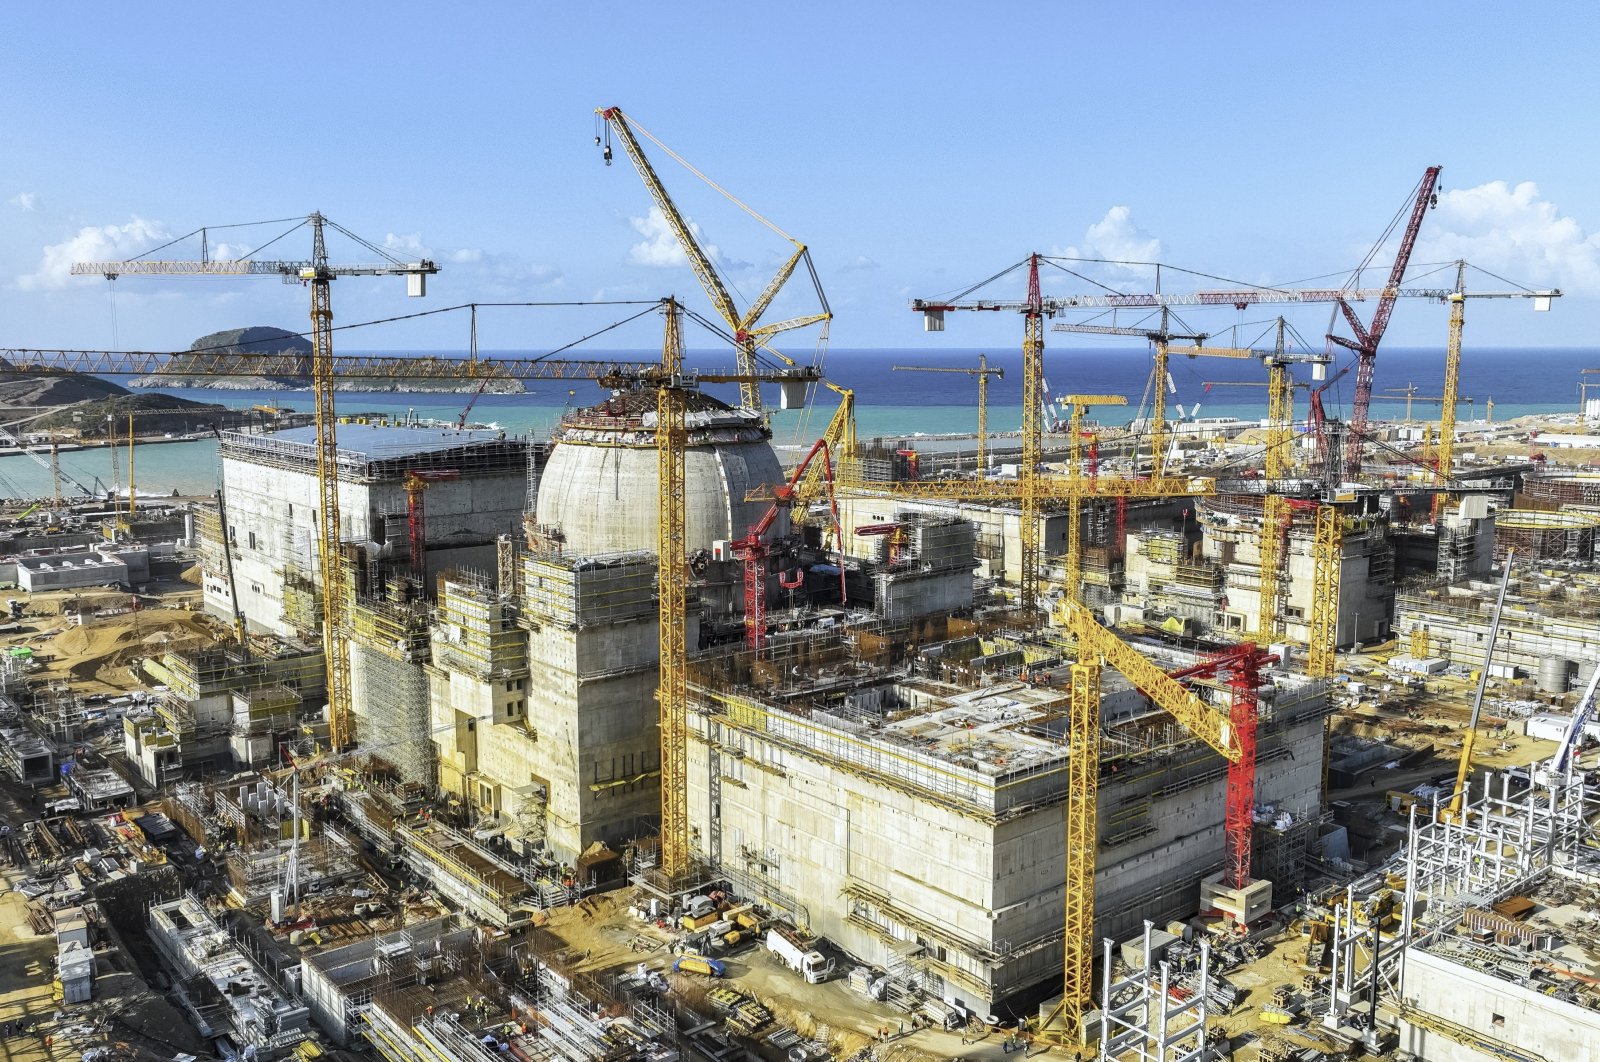 Türkiye raises fines for radioactive waste at nuclear facilities | Daily Sabah - Daily Sabah